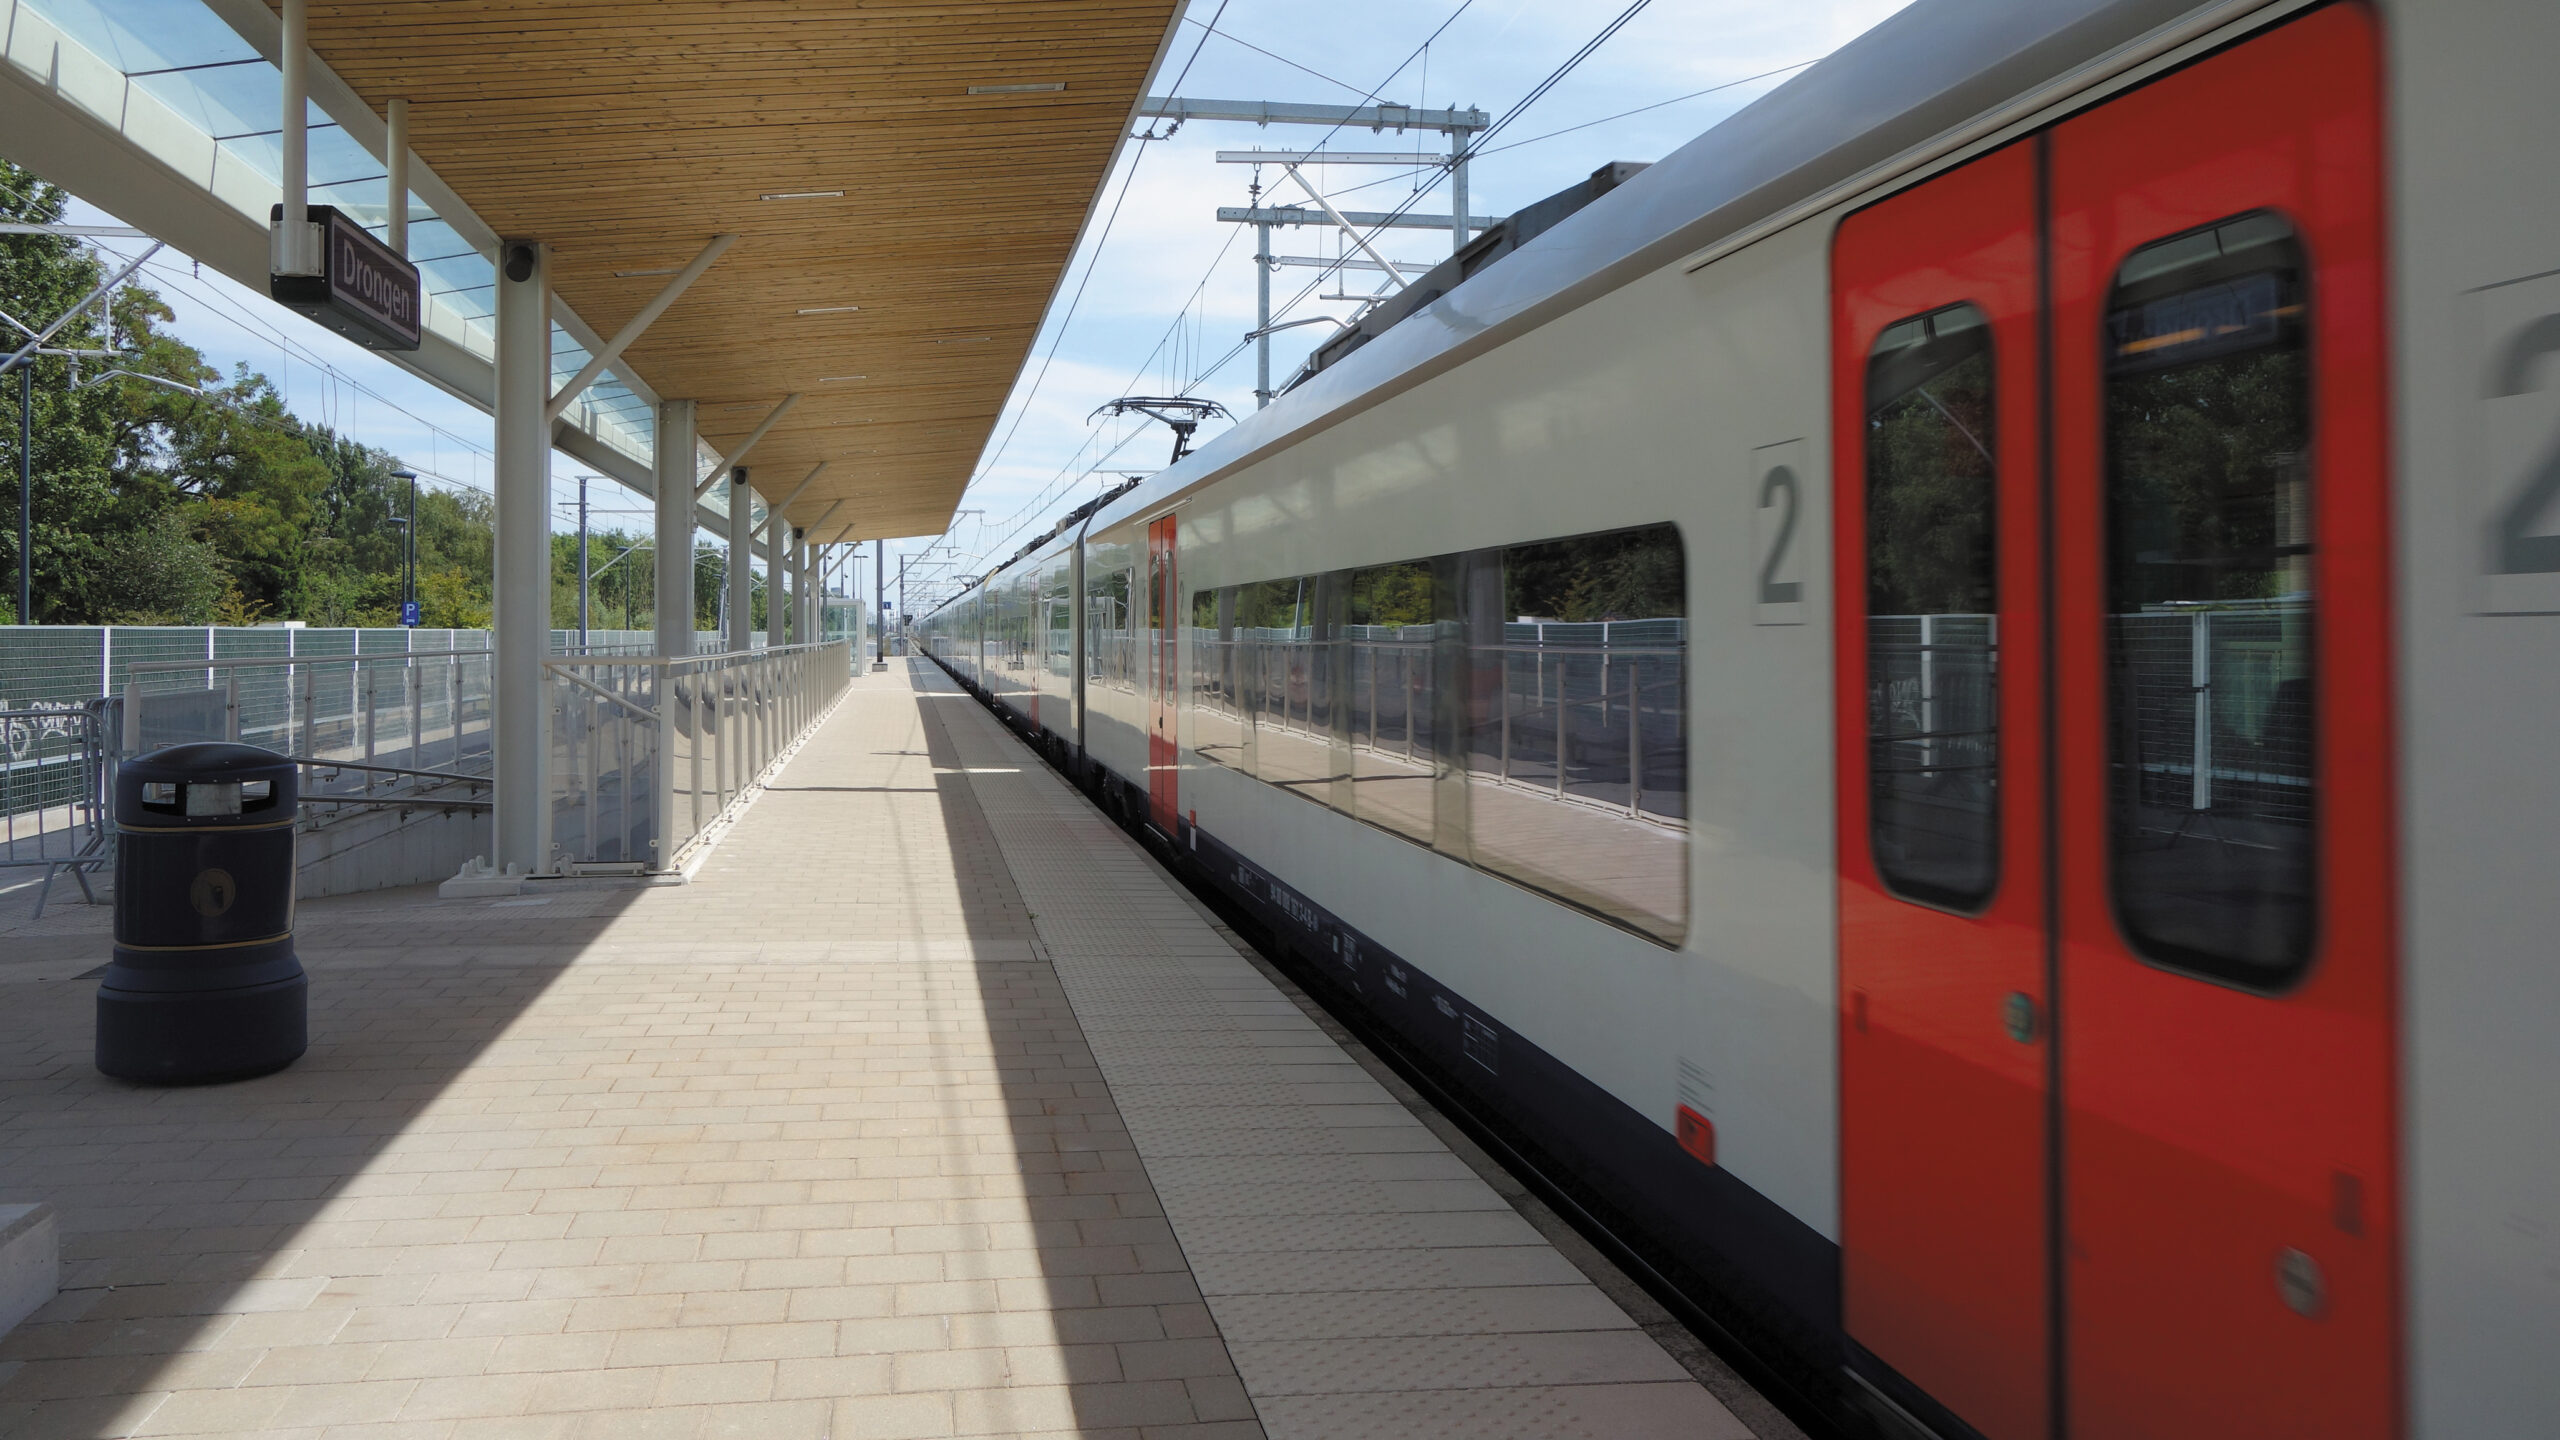 Station Drongen